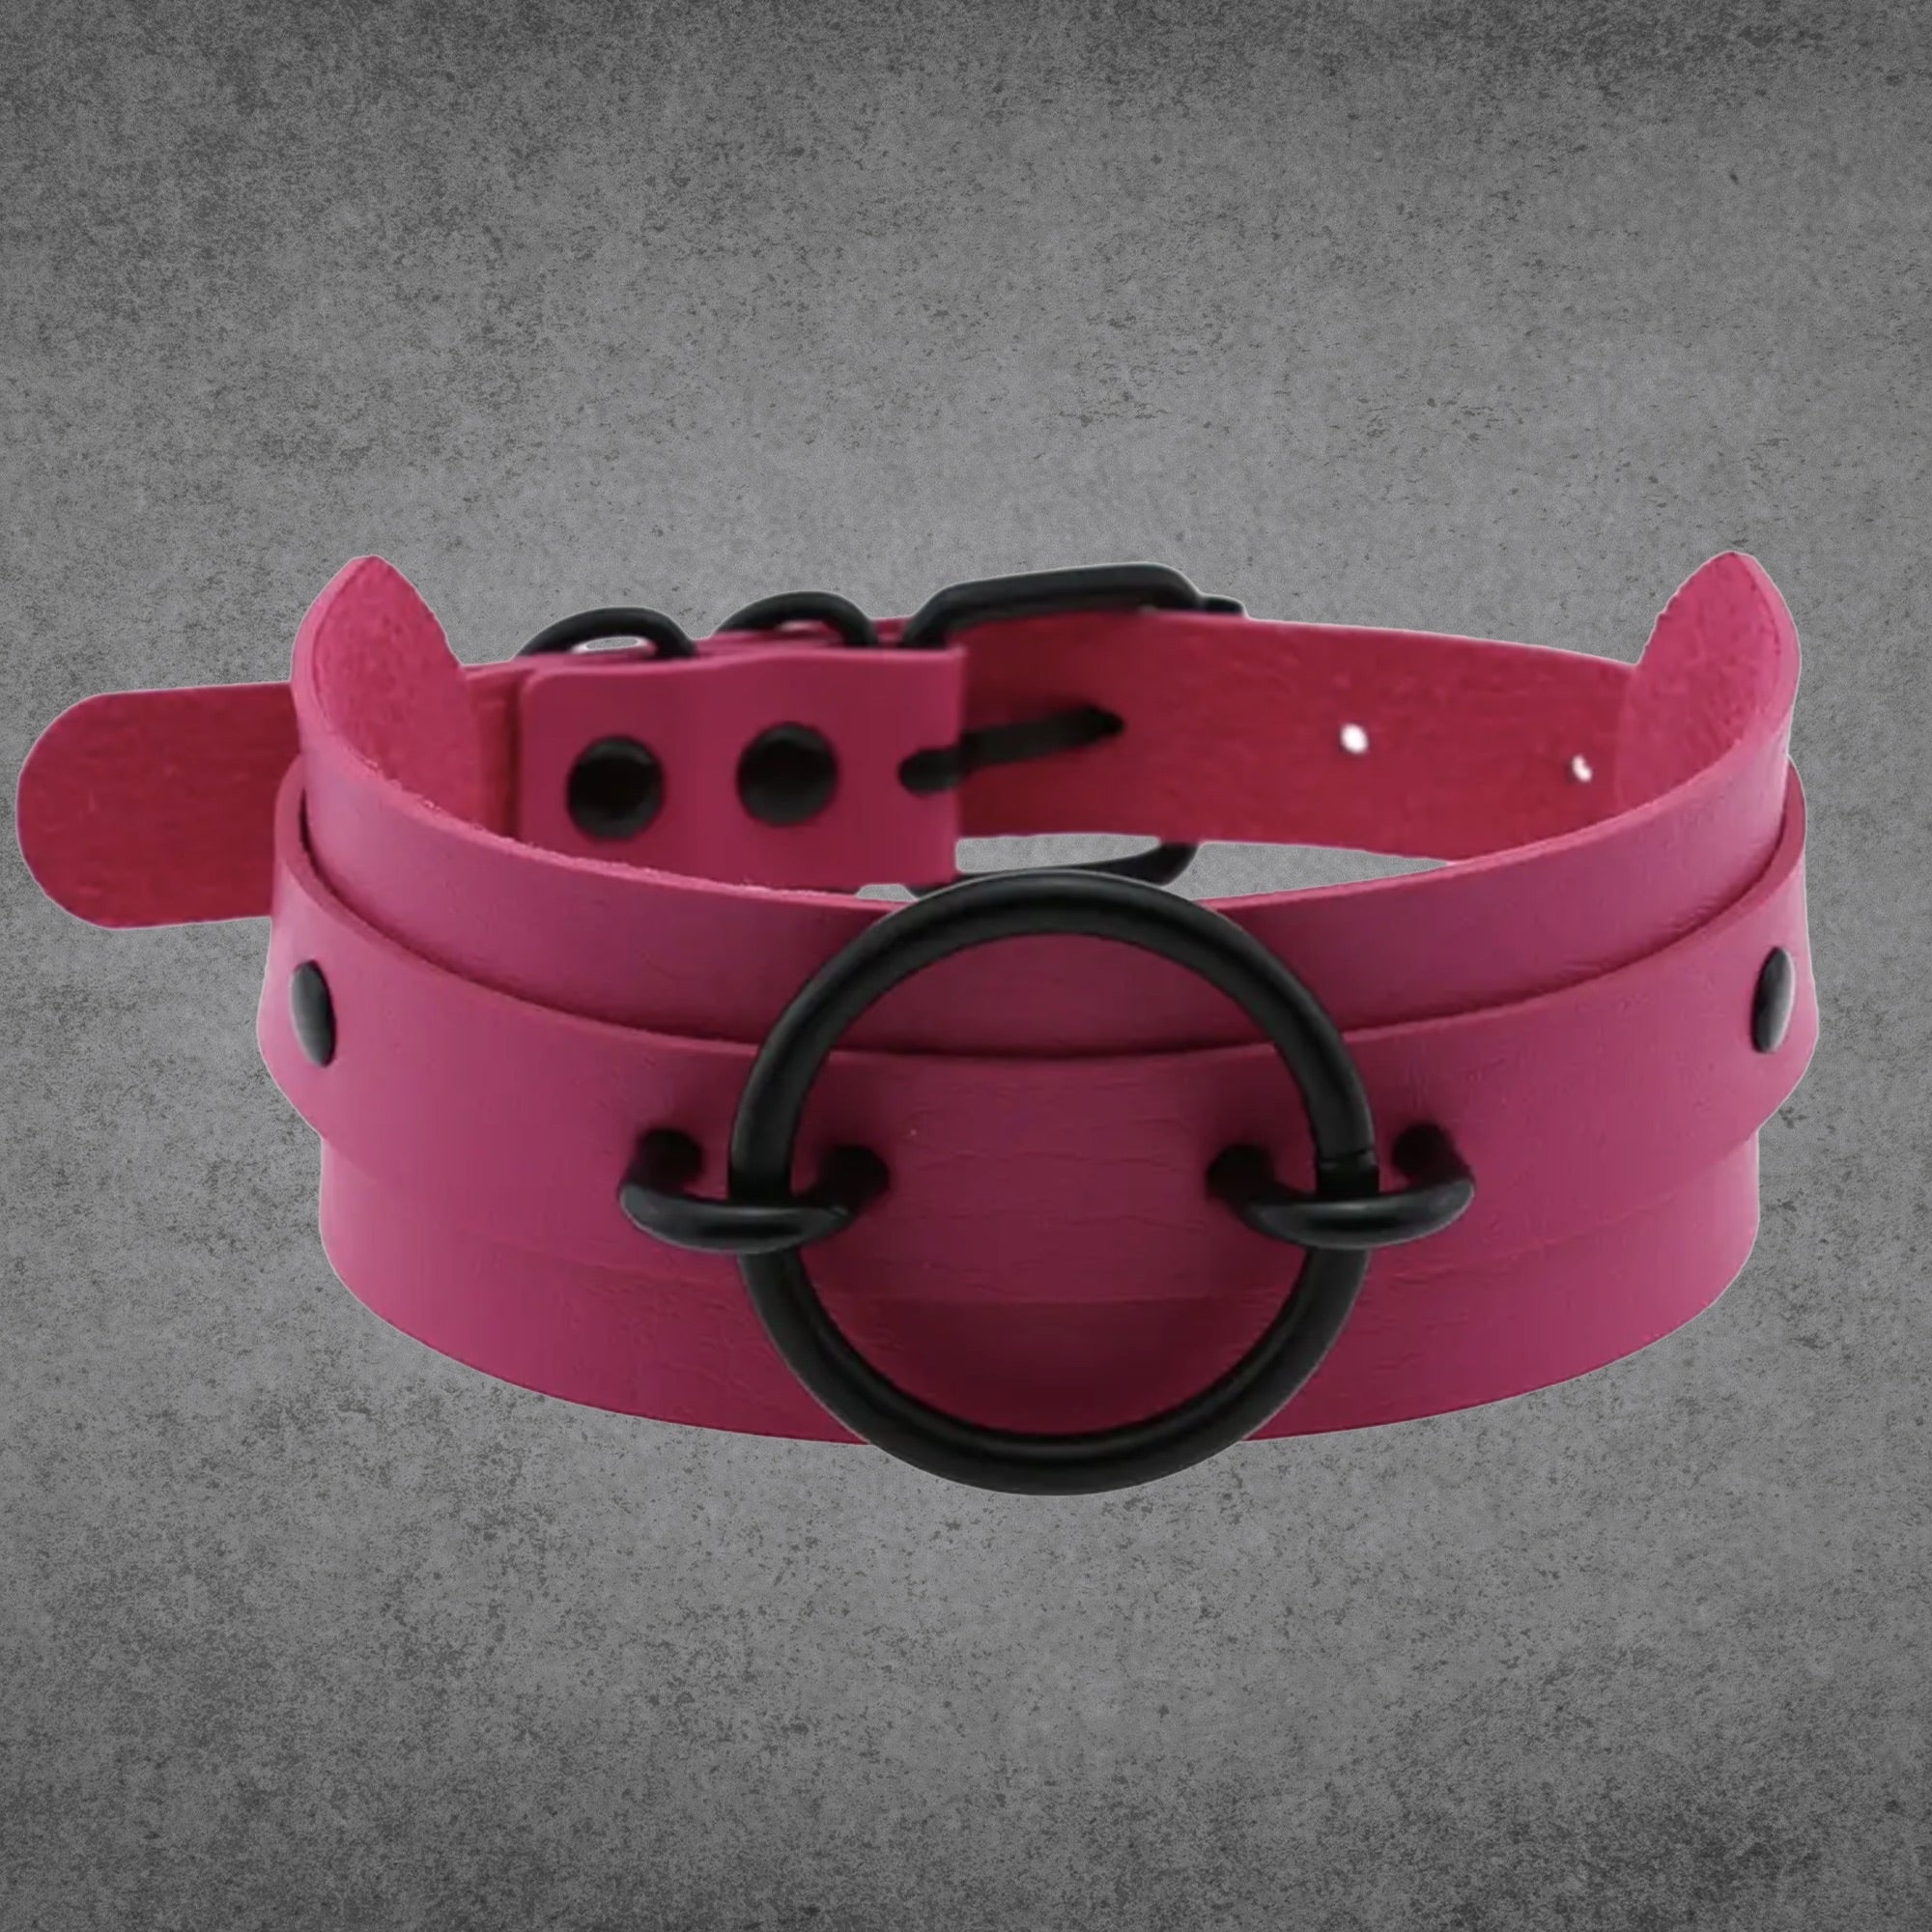 Fixed O Ring Choker Collar - Hot Pink & Black